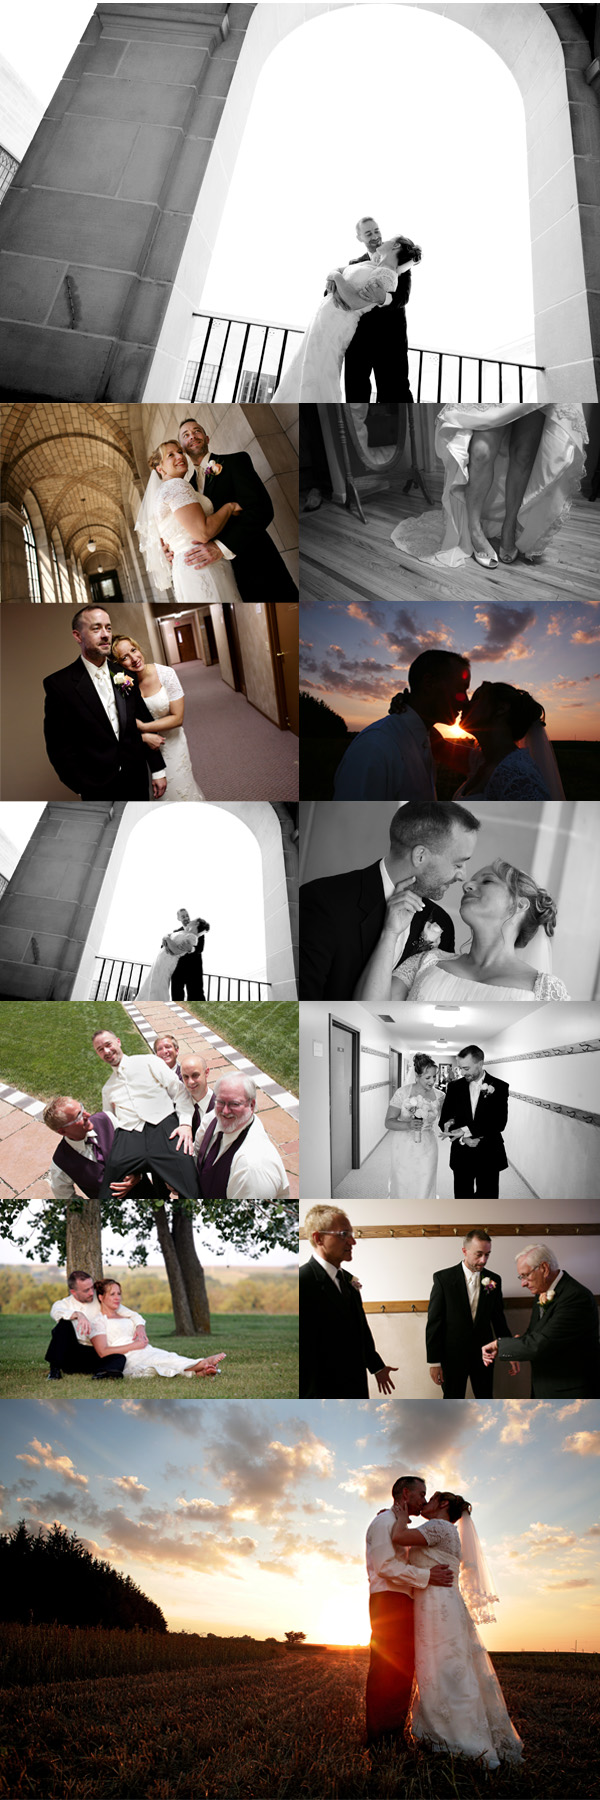 Kingsley Images - Wedding Photography